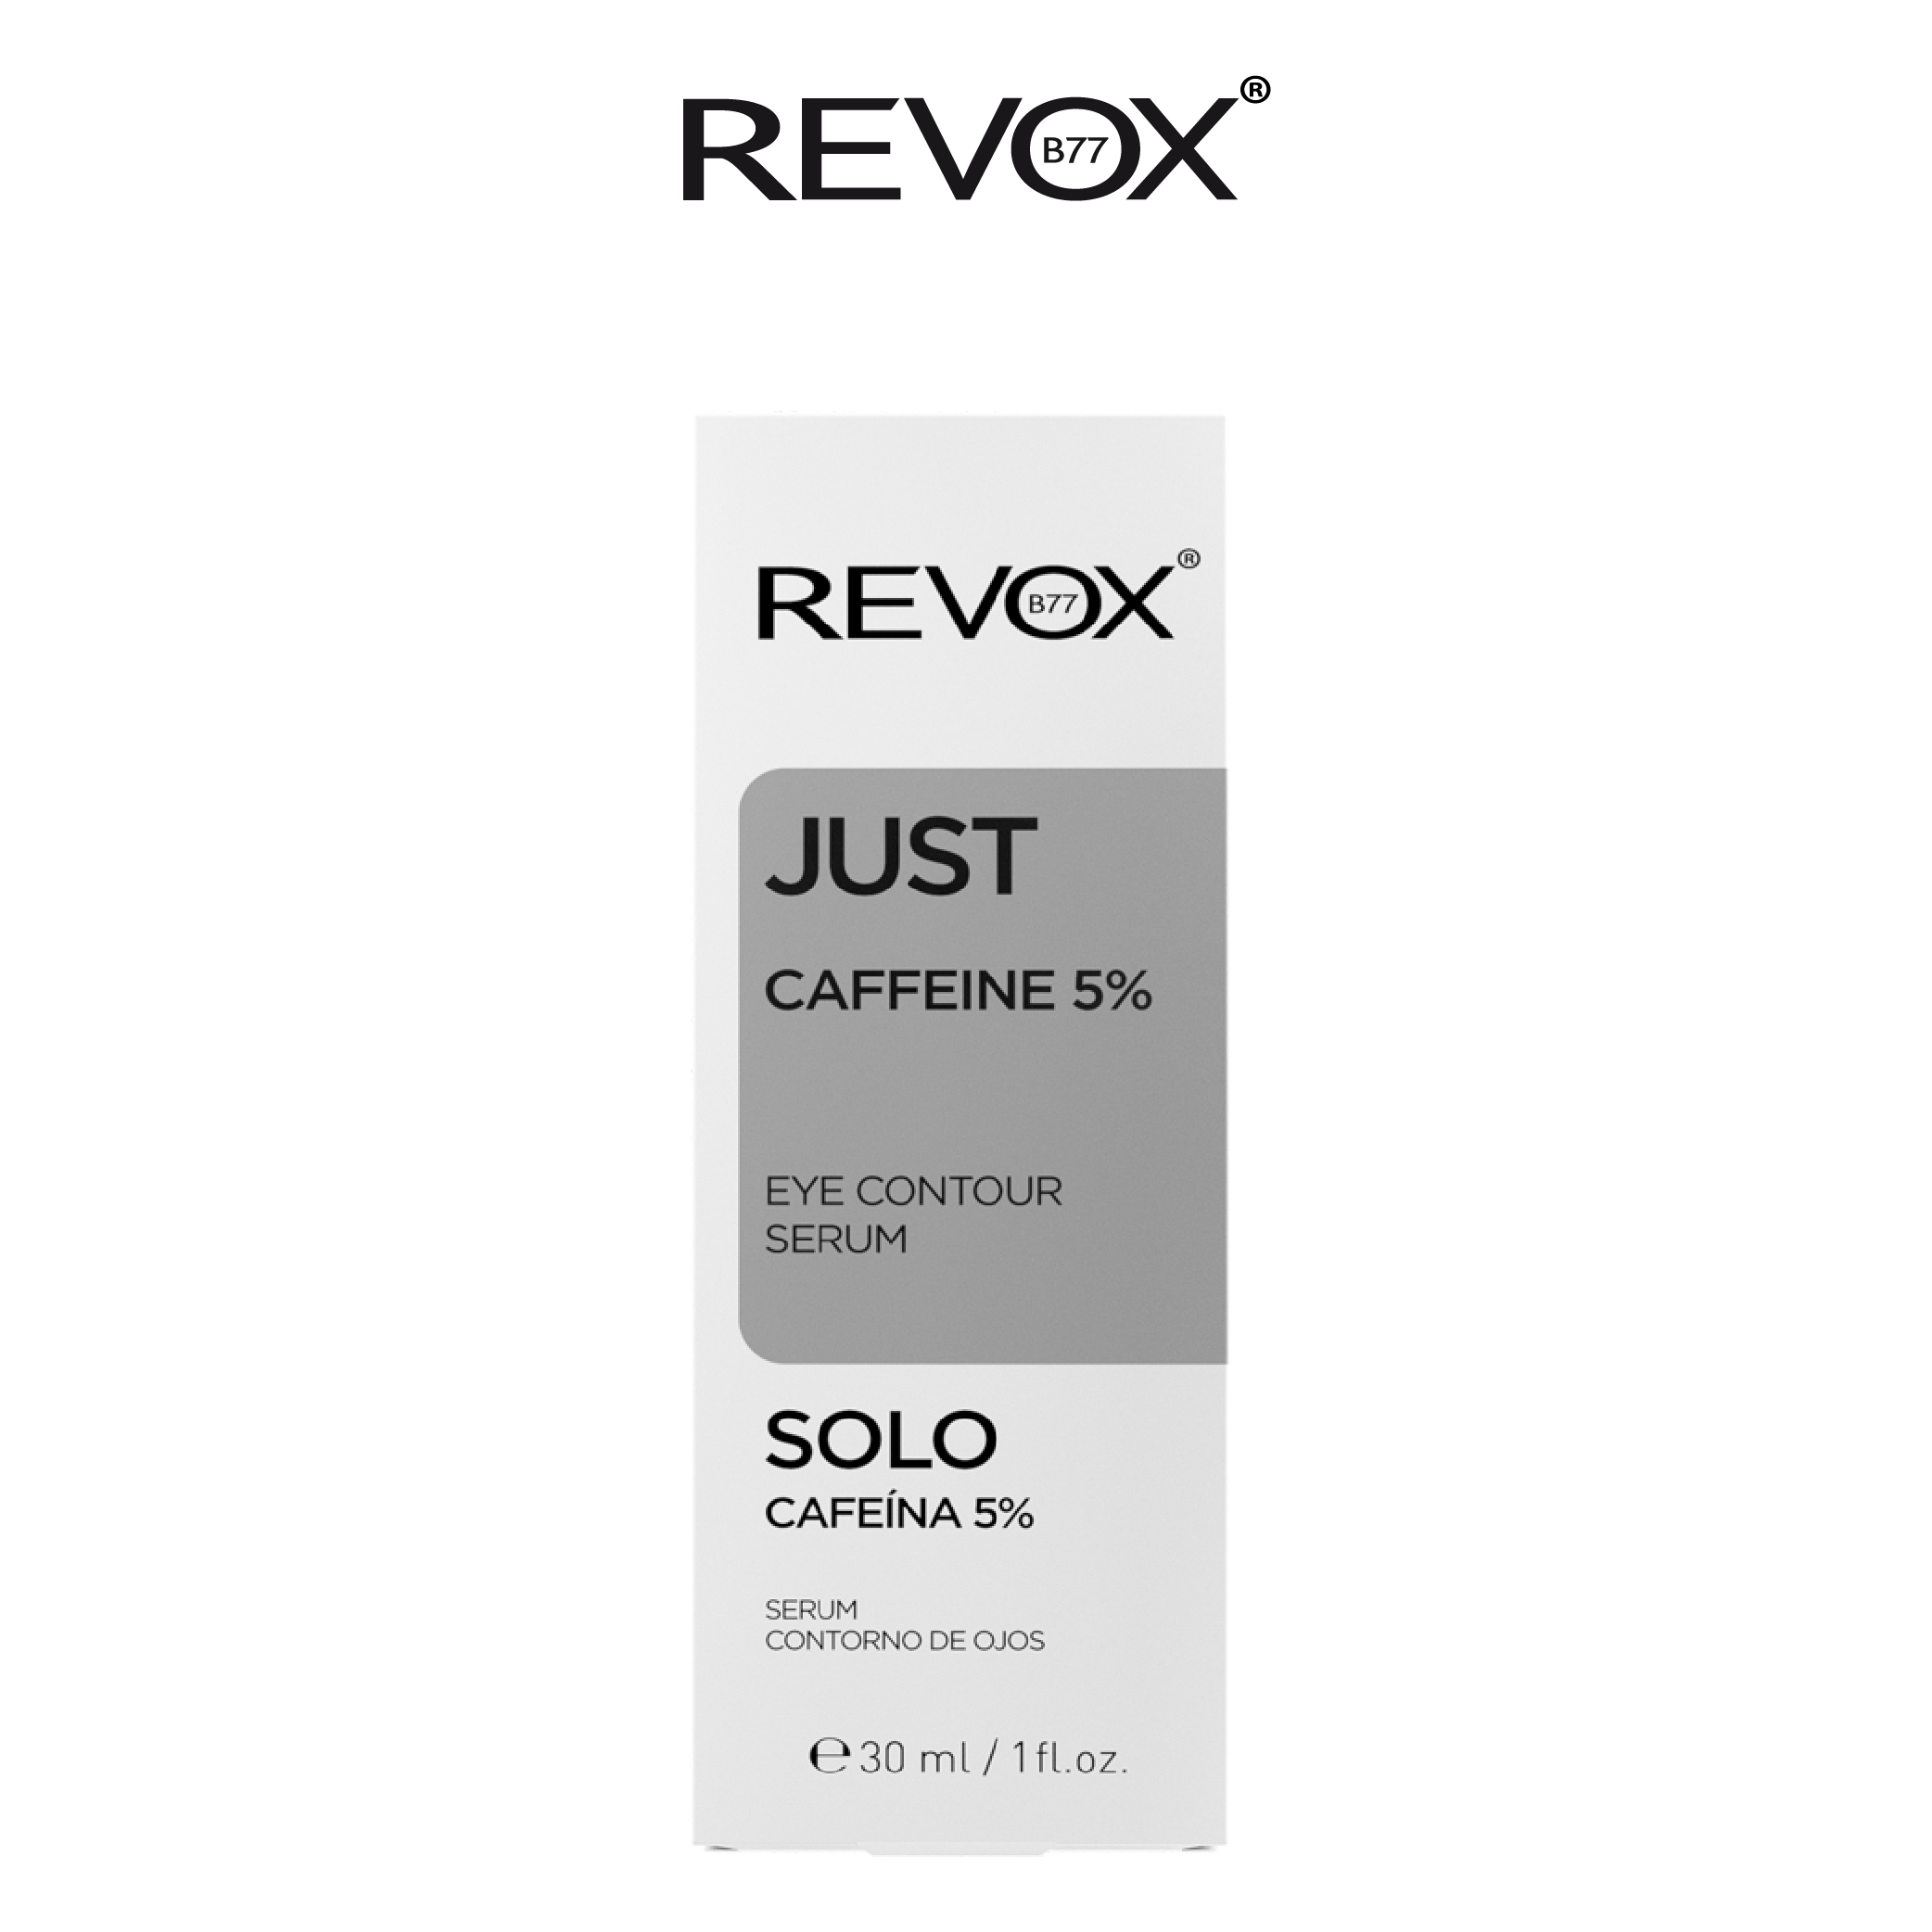 Serum cho vùng mắt Revox B77 Just - Caffeine 5%